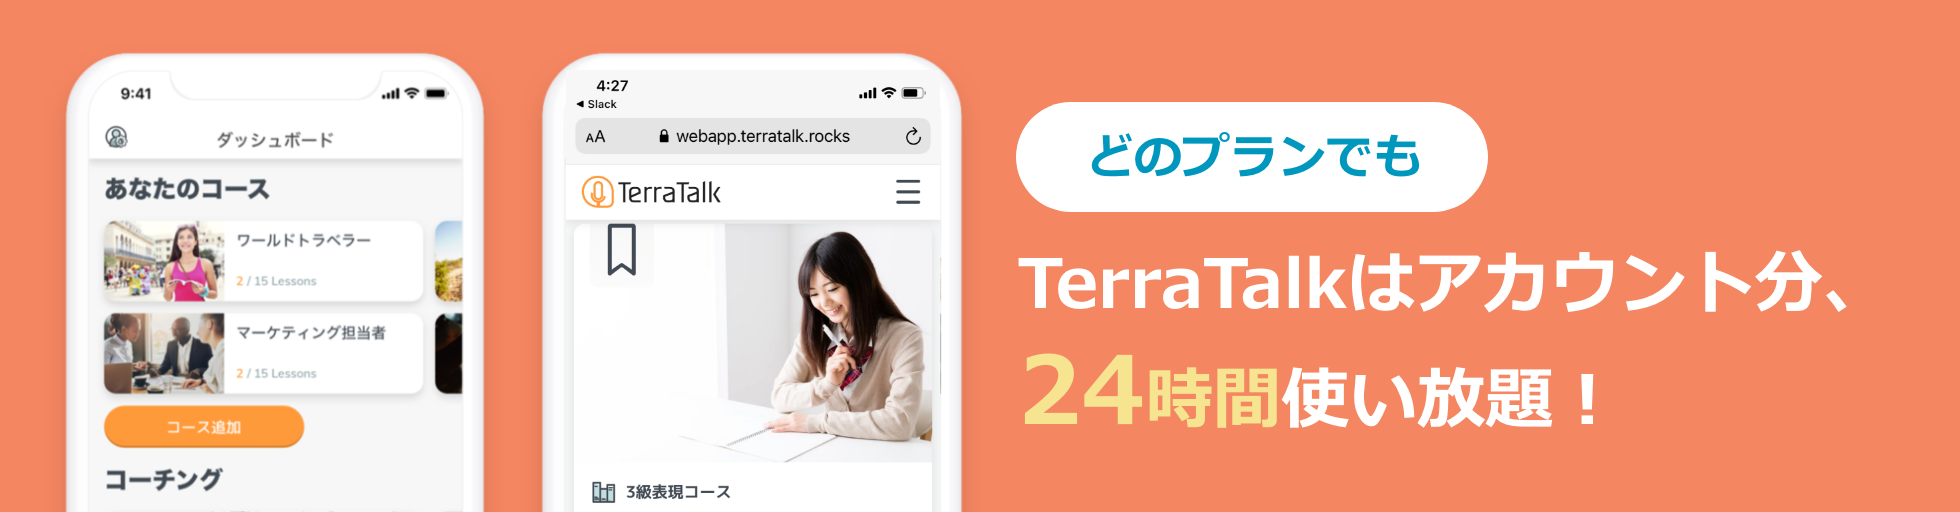 TerraTalkはアカウント分、24時間使い放題!